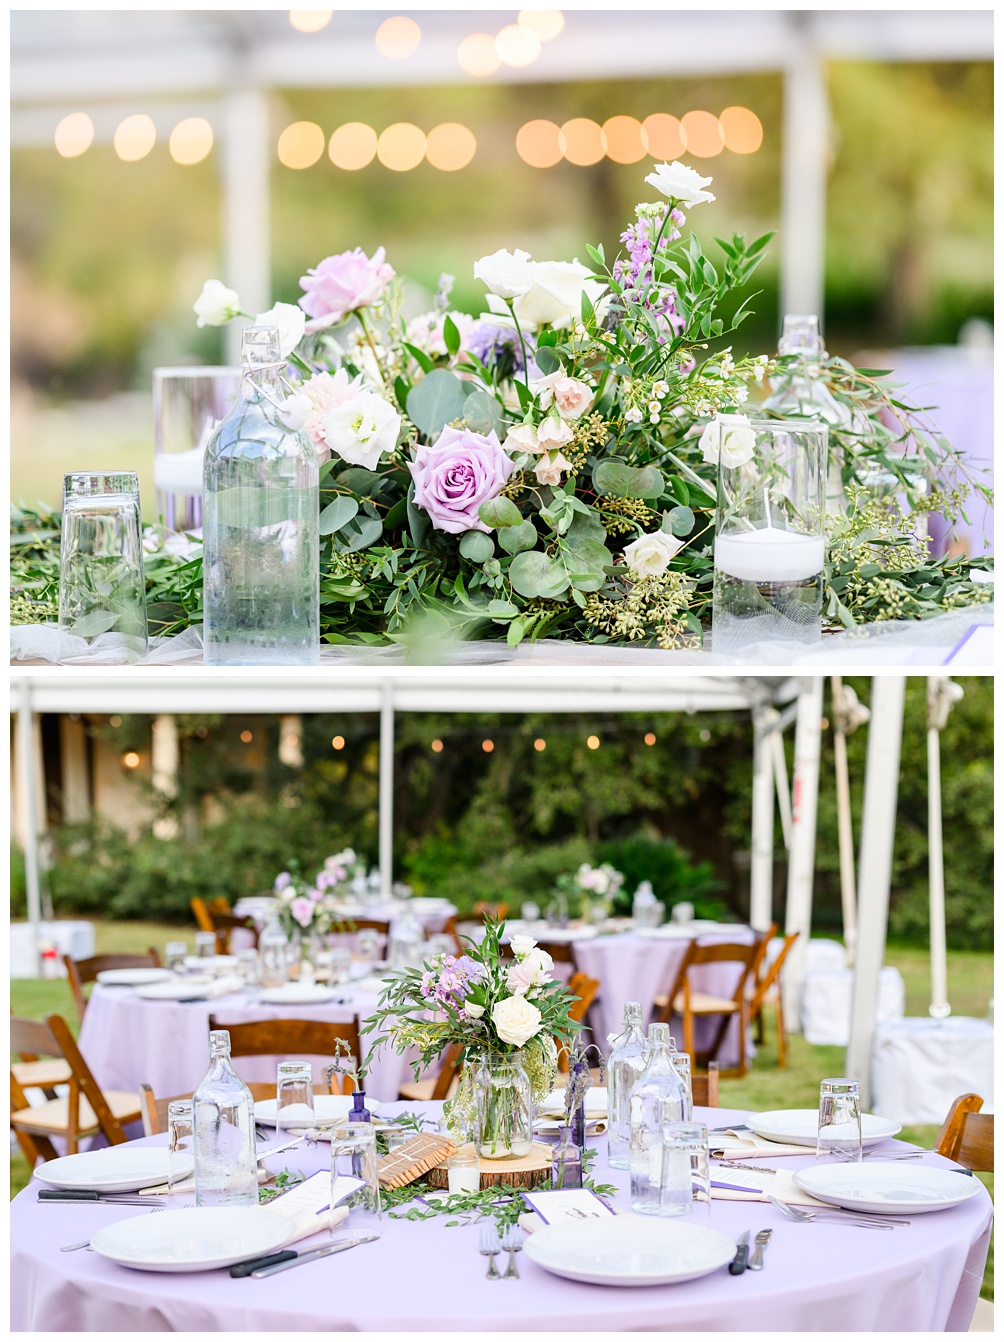 Cone flower designs lavender wedding reception centerpieces 